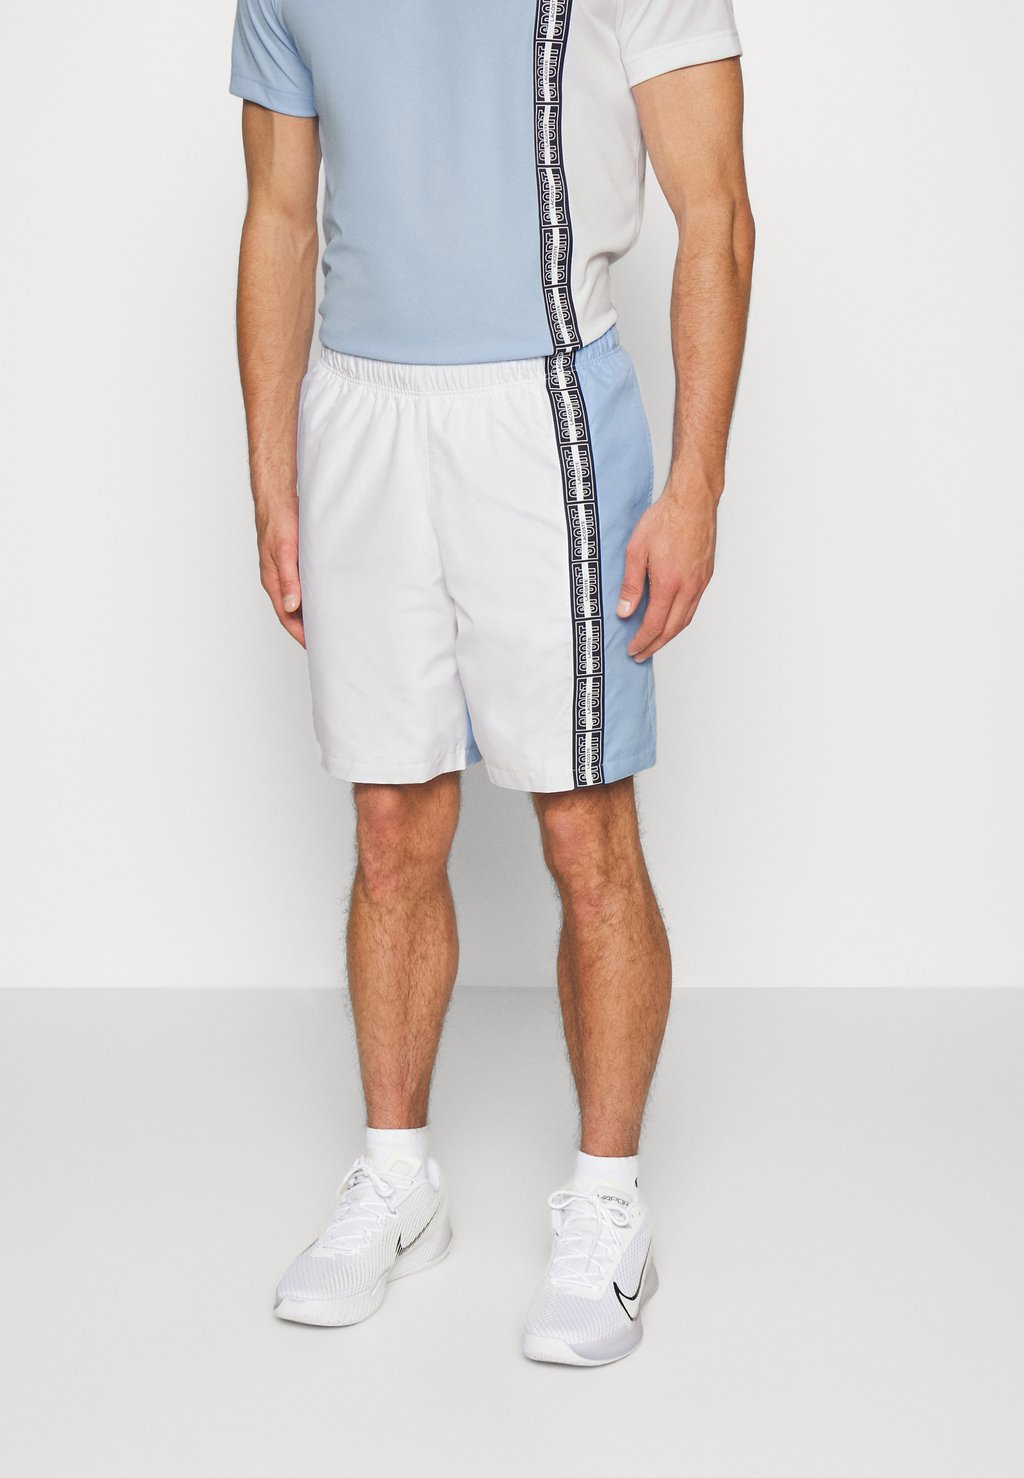 Спортивные шорты Tennis Lacoste, цвет white/navy blue спортивные брюки tennis pant lacoste цвет sinople navy blue